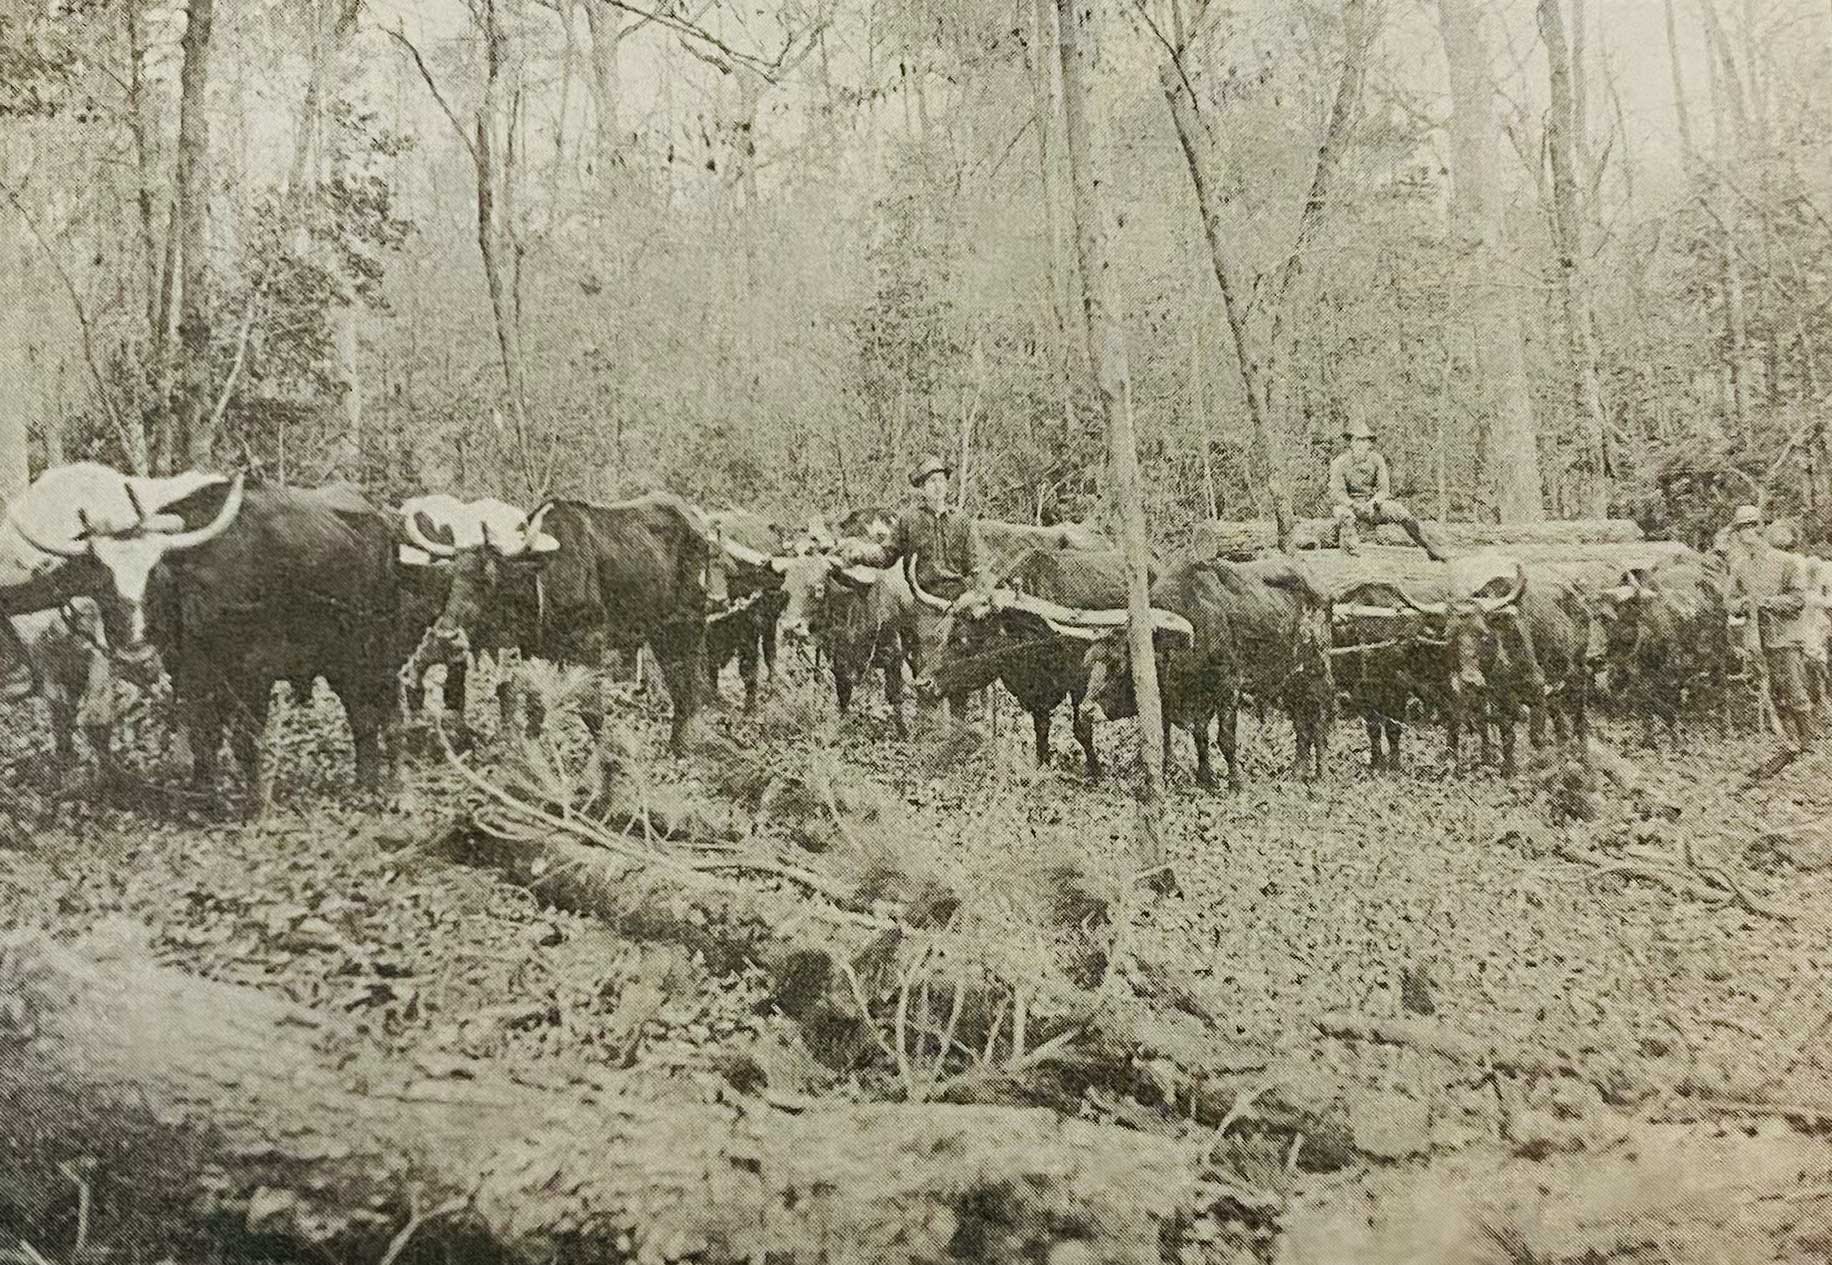 oxen-pulling-logs-1911